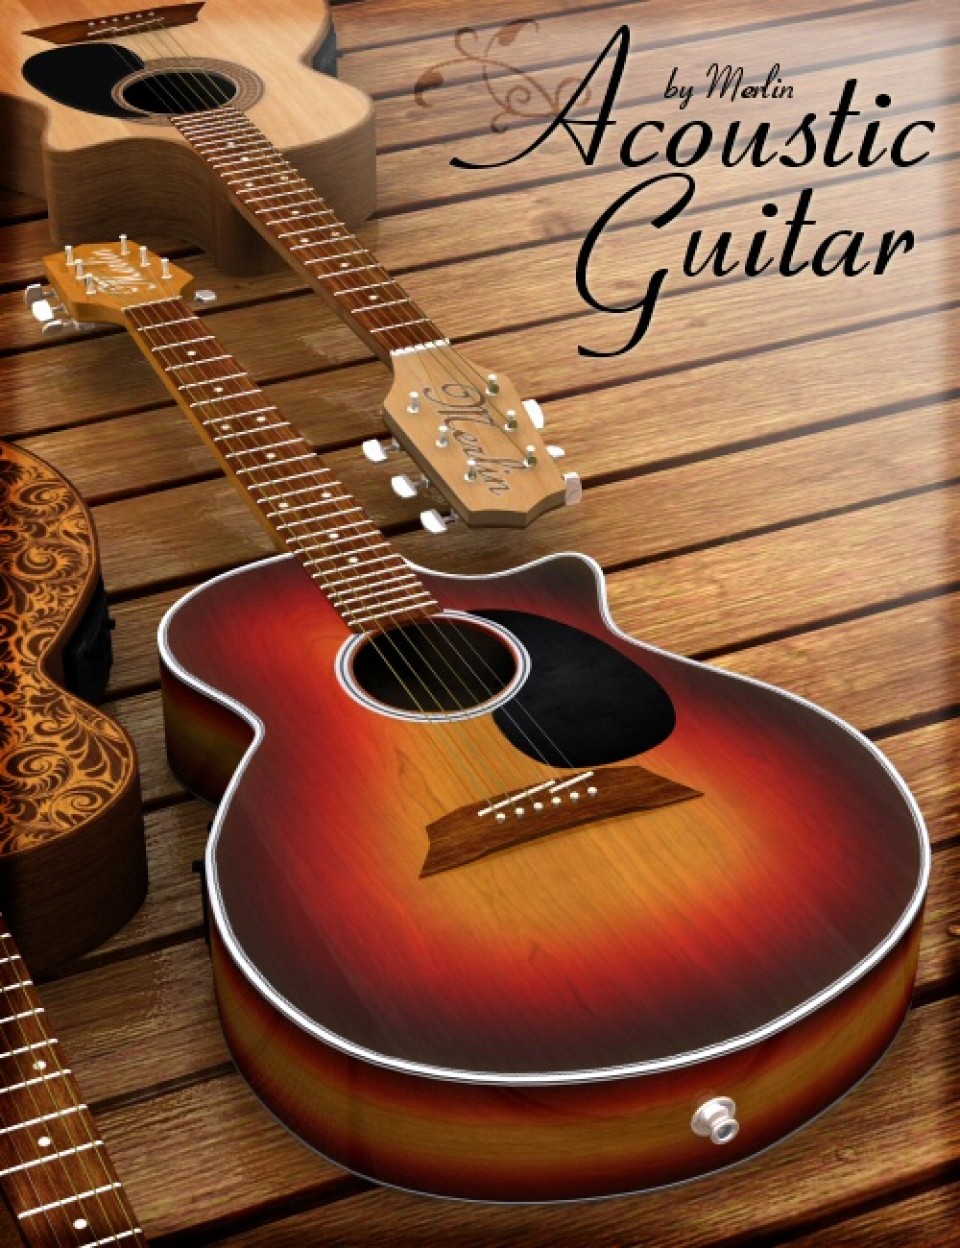 Acoustic Guitar by Merlin_DAZ3D下载站